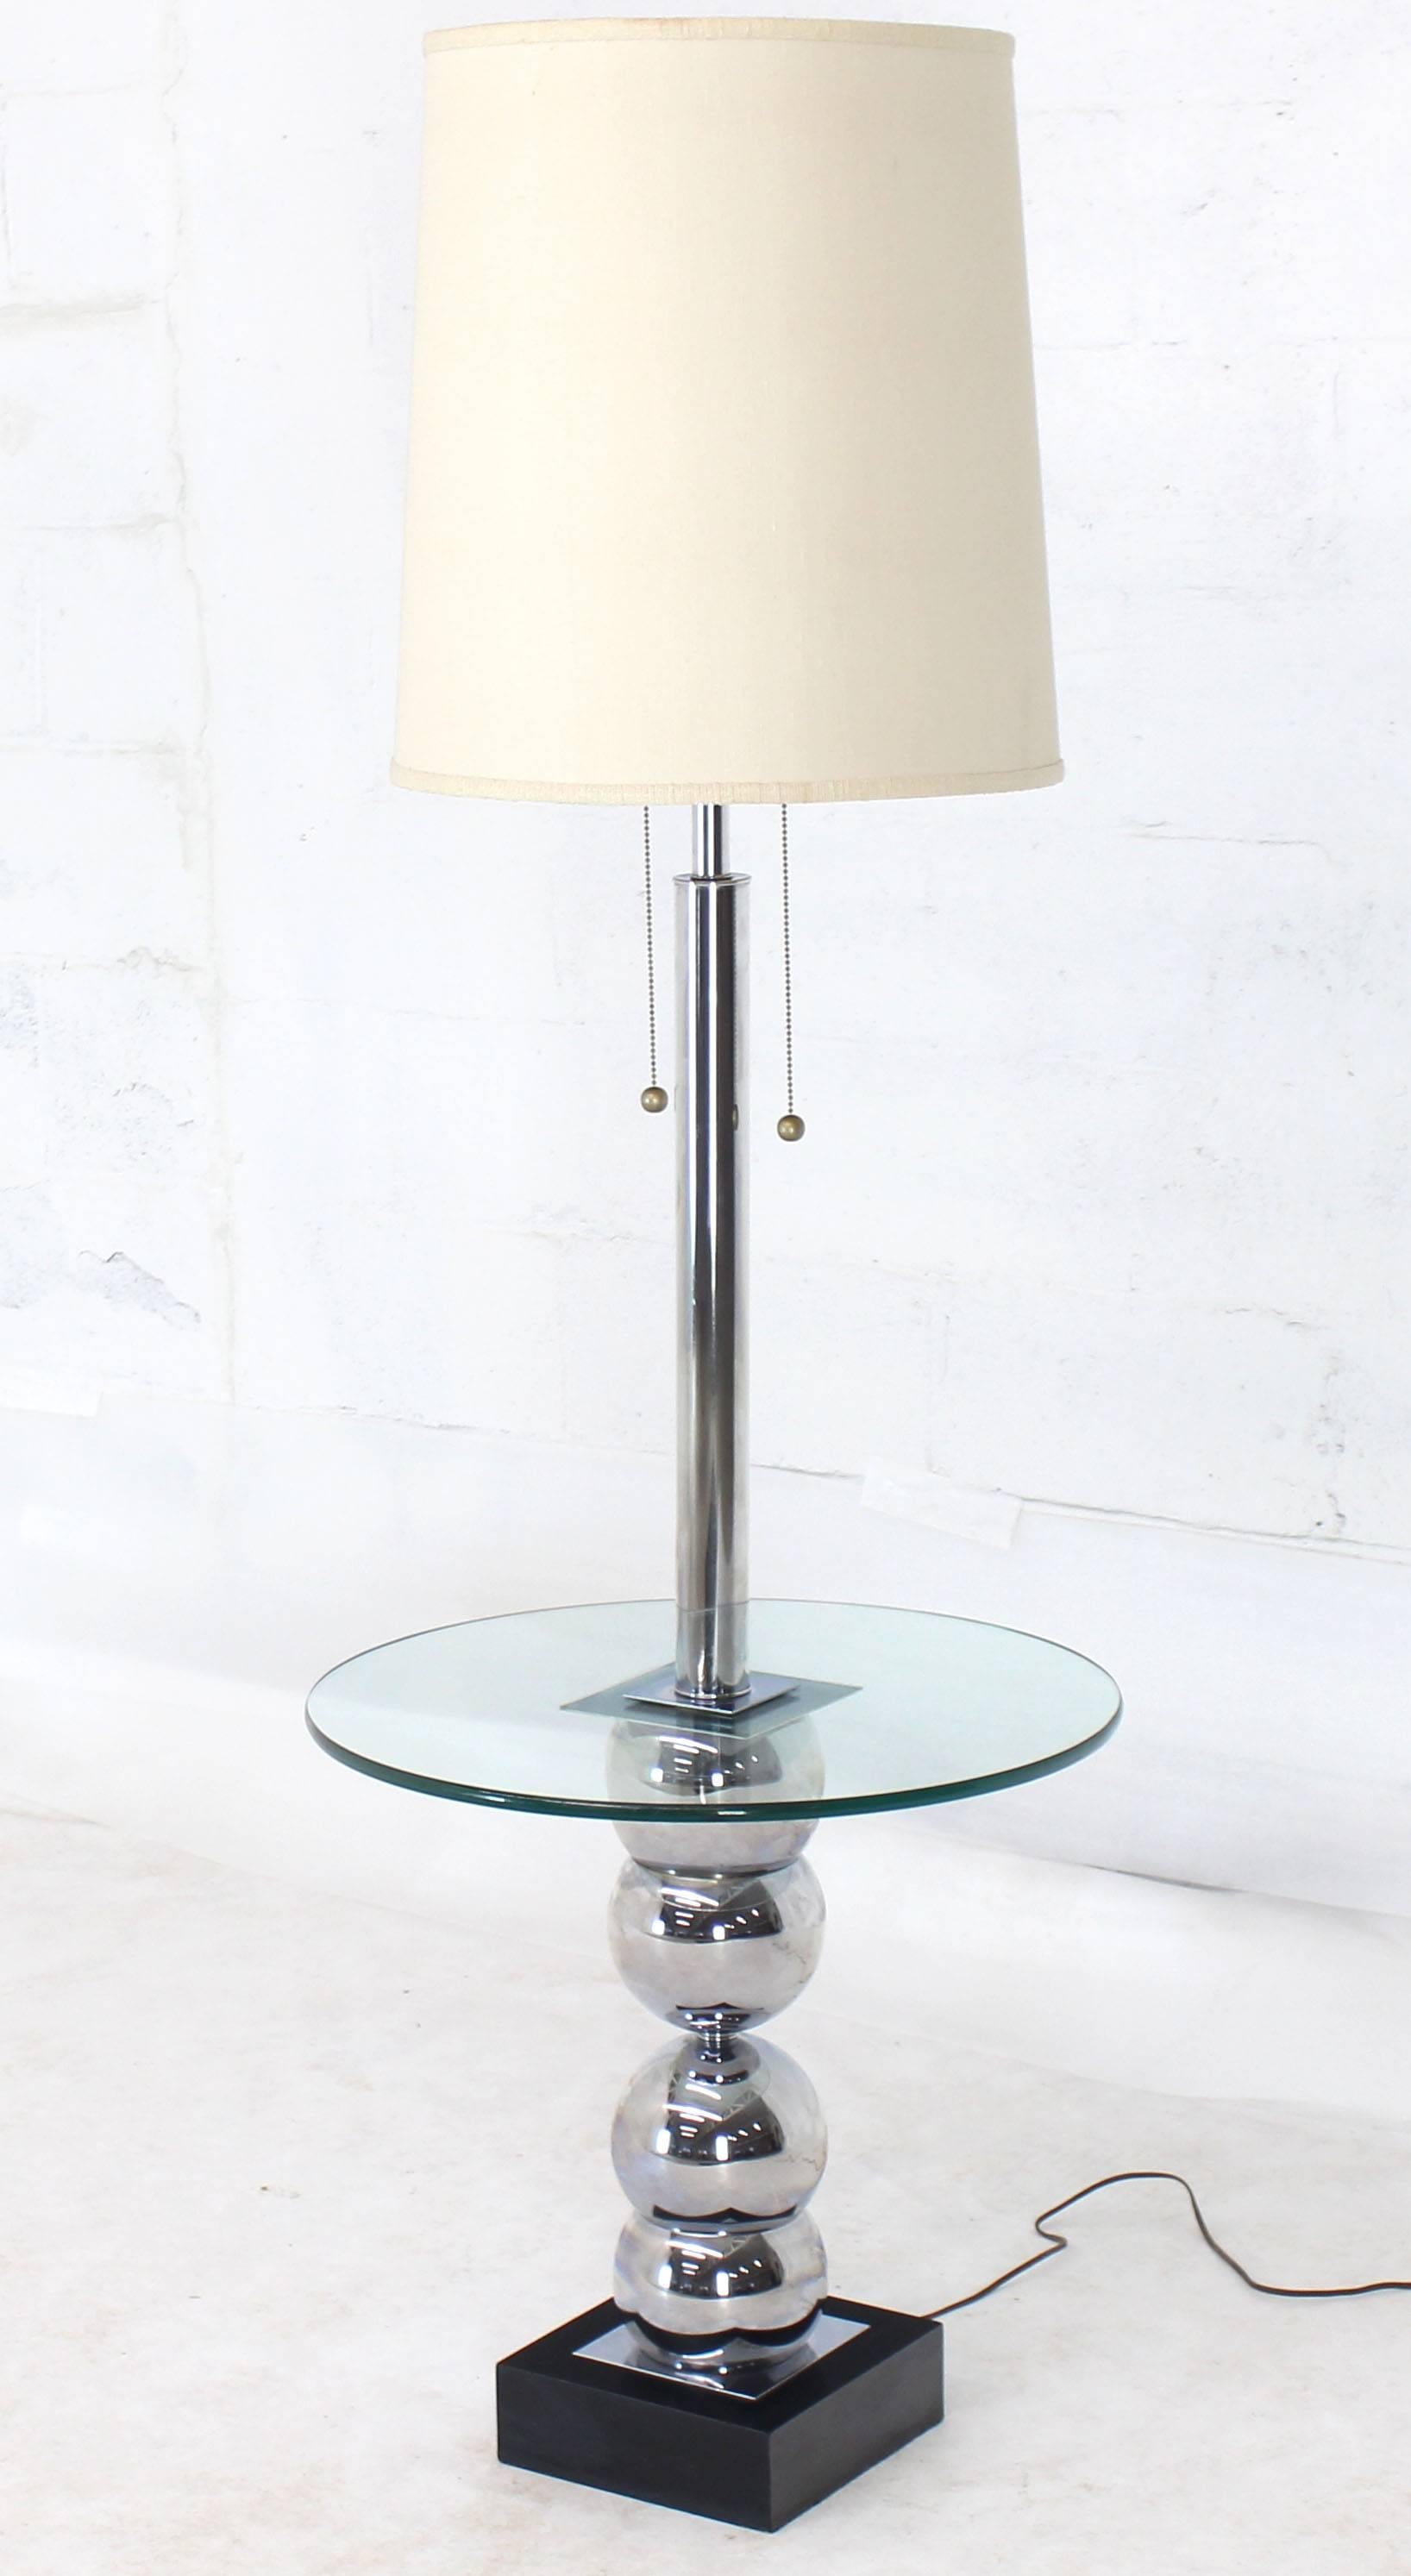 Mid-Century Modern stack chrome side table floor lamp.